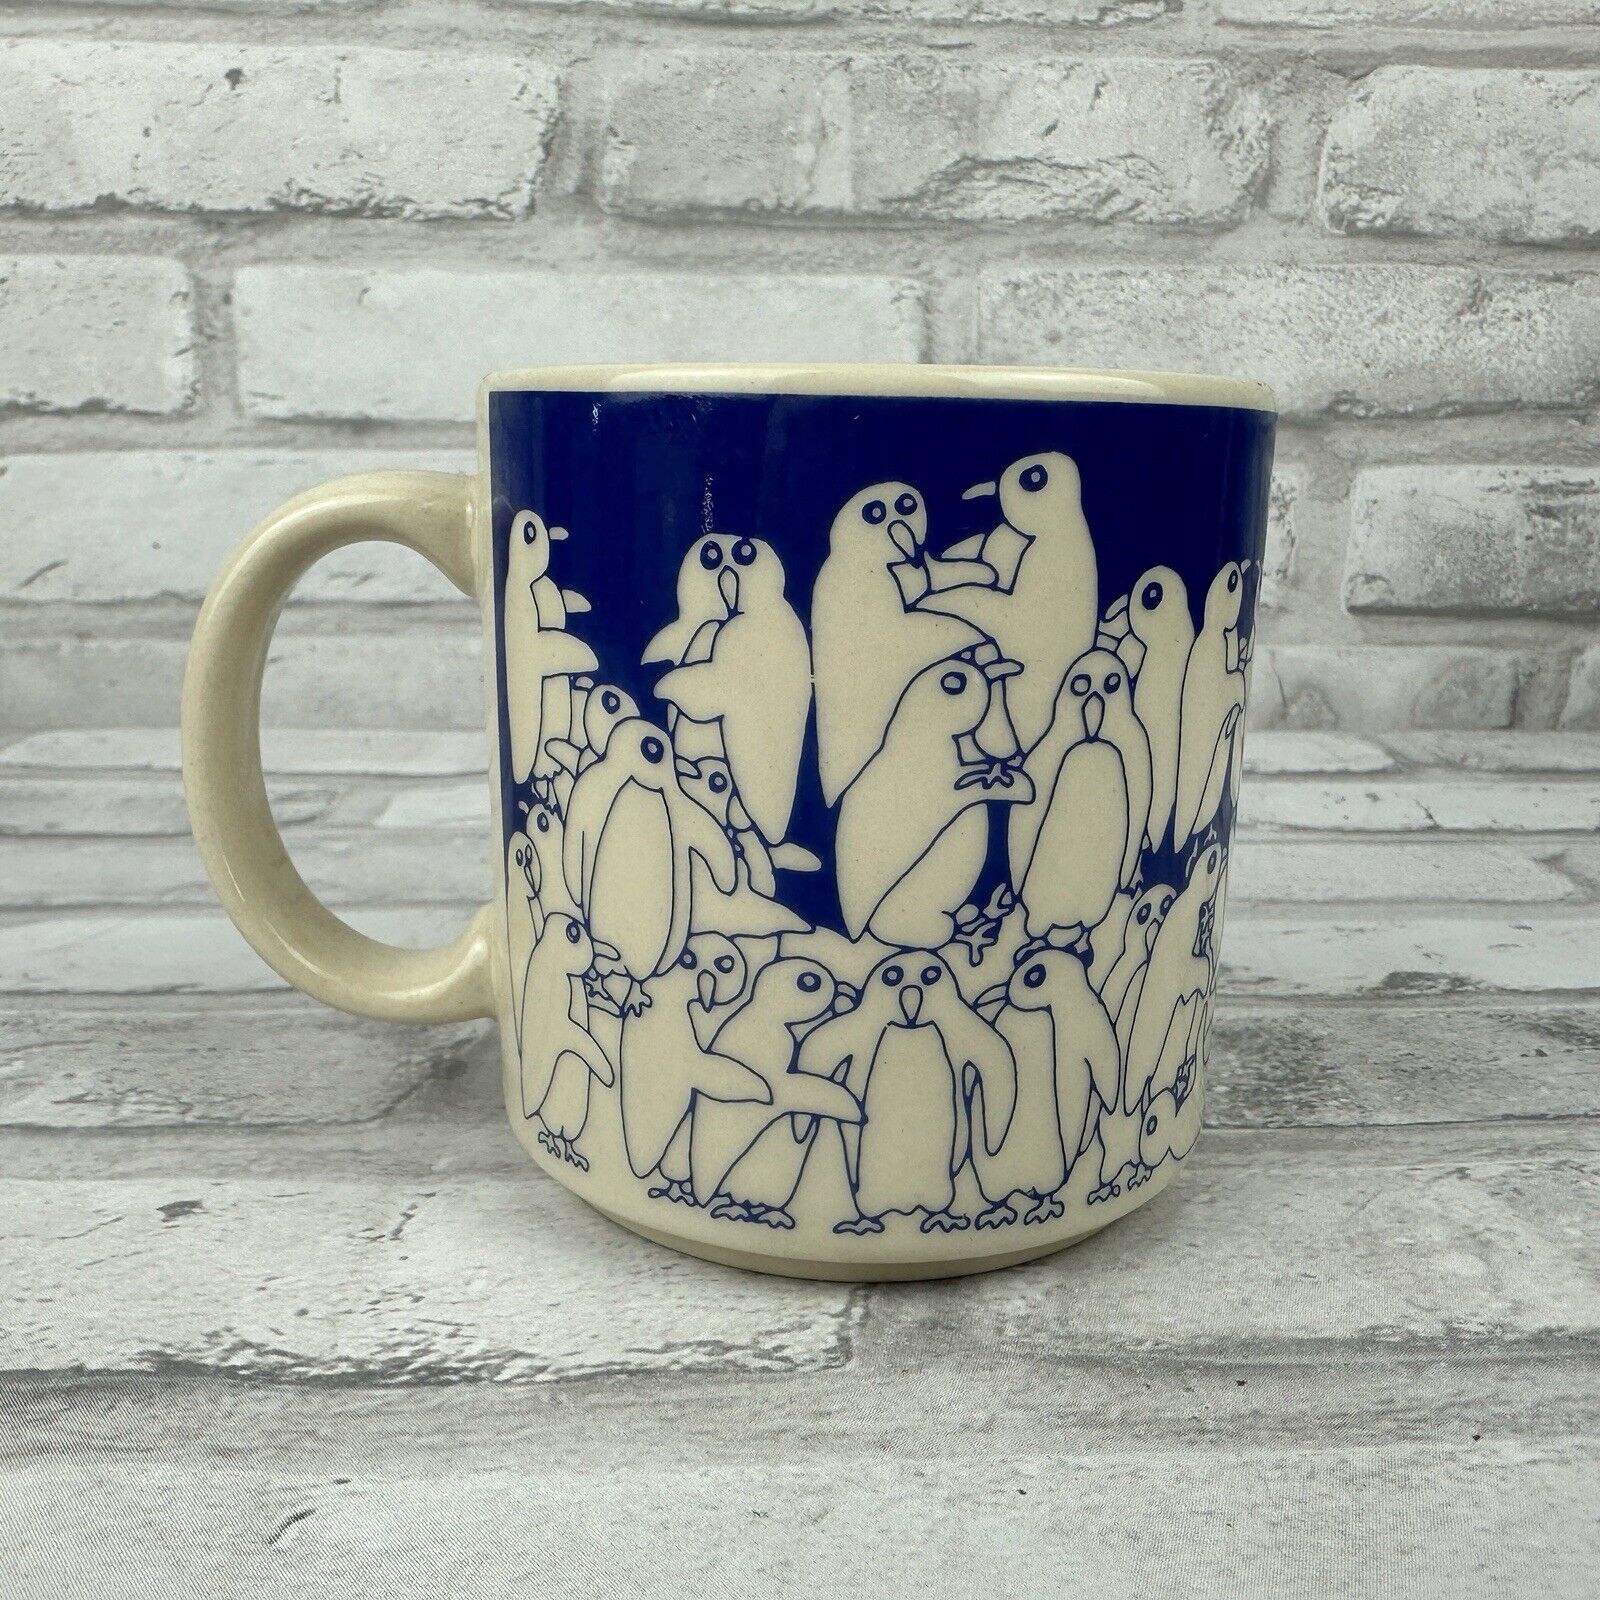 Taylor & Ng Mug Naughty Penguins 1984 Vintage Blue Cream Coffee Cup Novelty